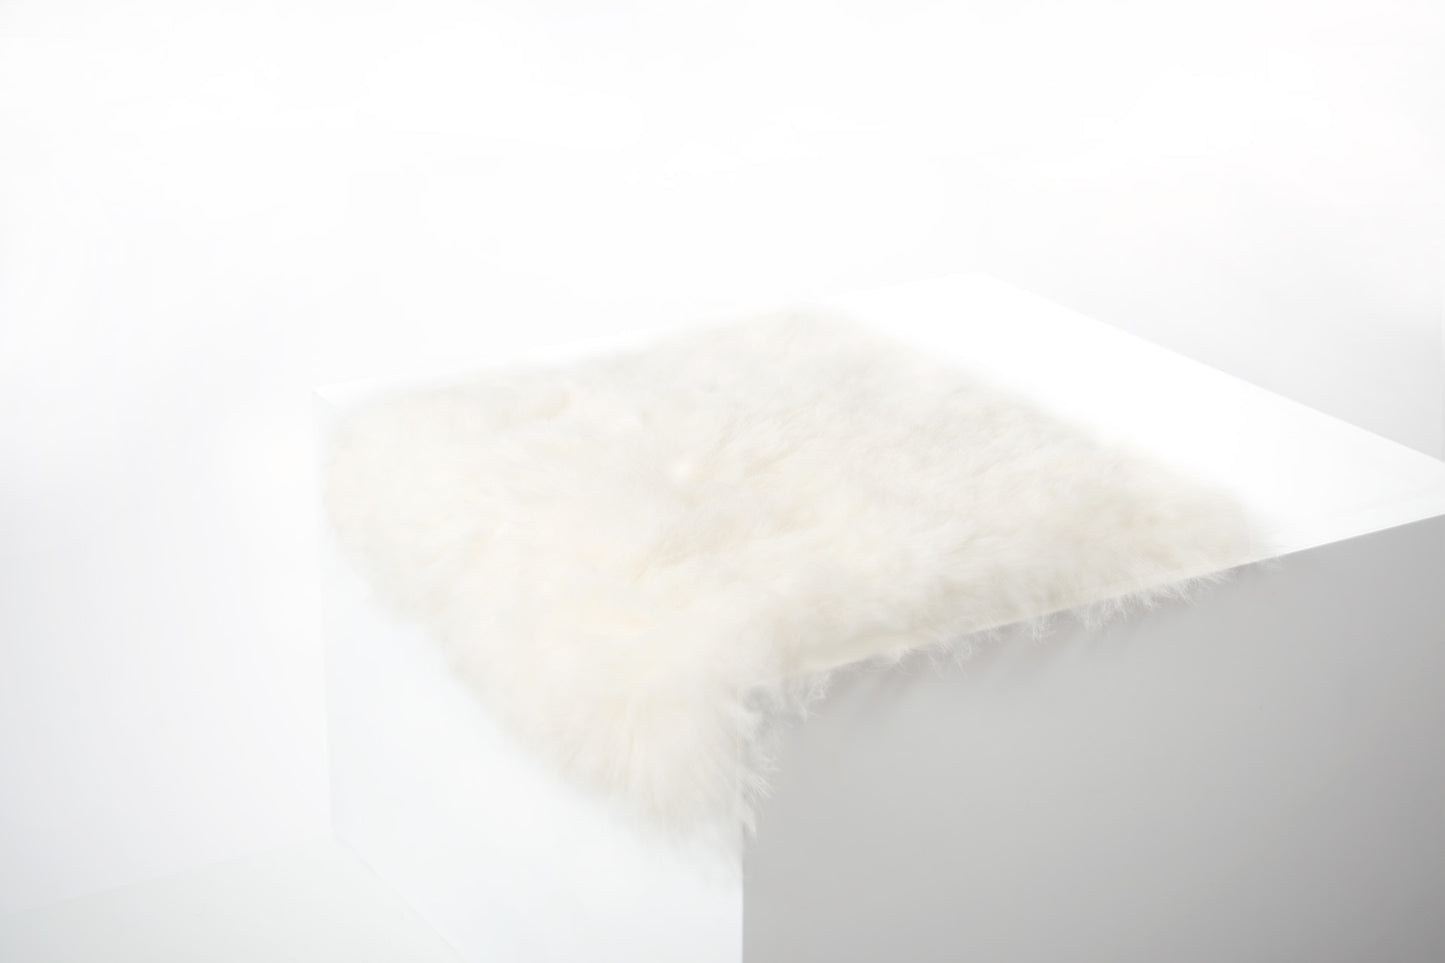 Shorn White Icelandic Sheepskin Chair Pad - Black Sheep (White Light)